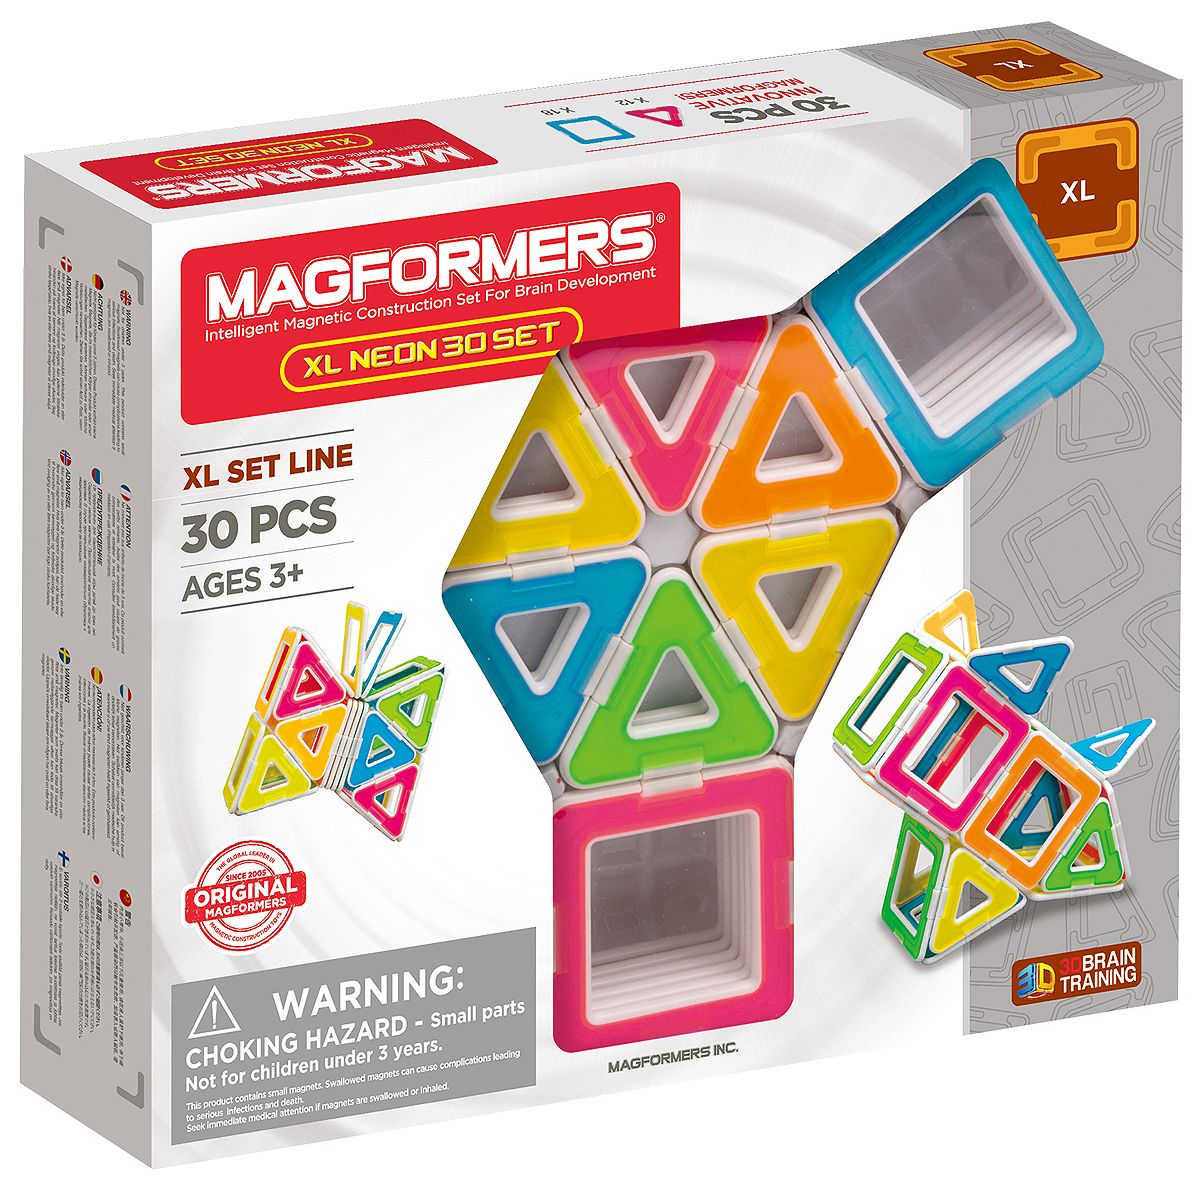   Magformers XL Neon 30 set